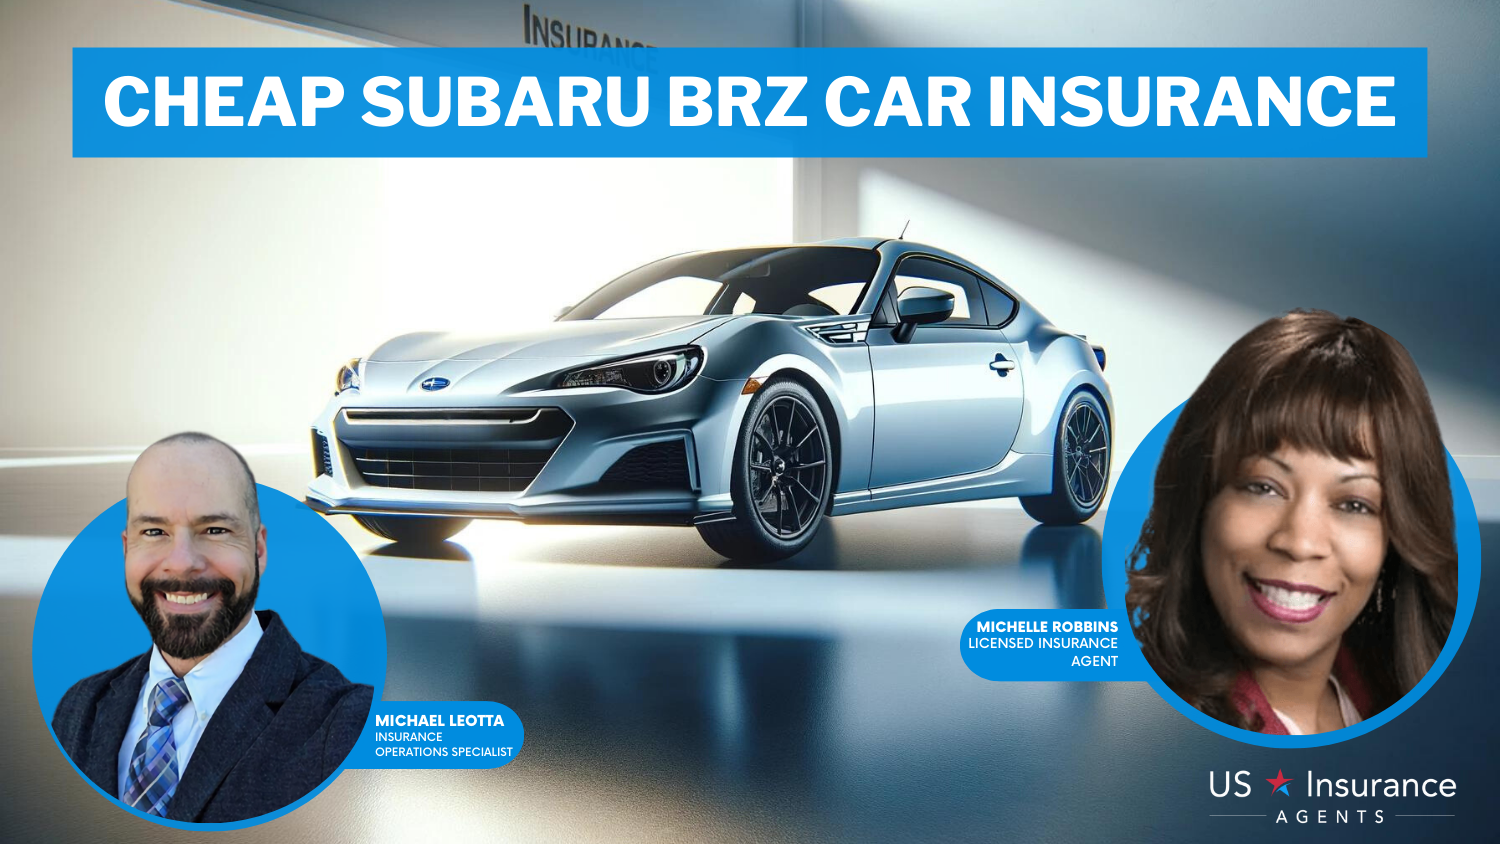 Travelers, Progressive, and Nationwide: Cheap Subaru BRZ car insurance